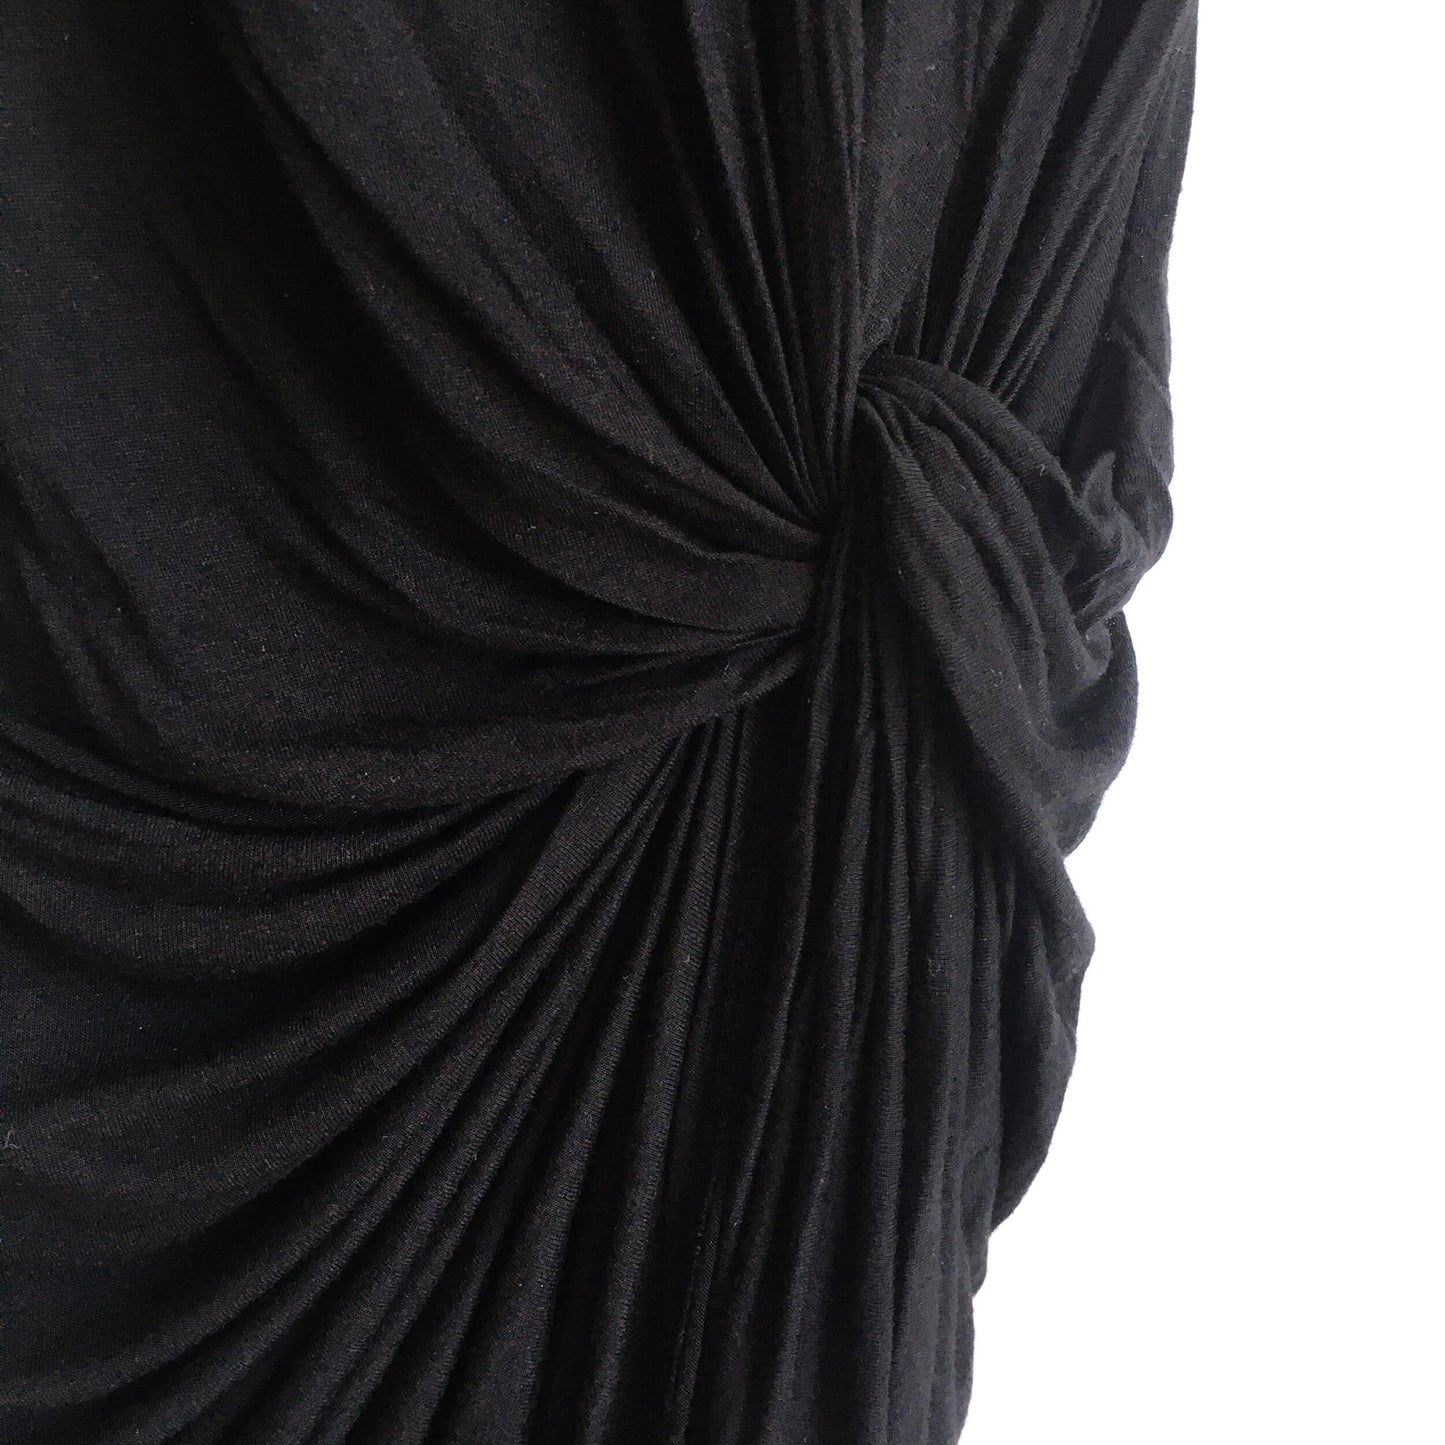 Helmut Lang asymmetrical draped knotted jersey dress - size xs (P)